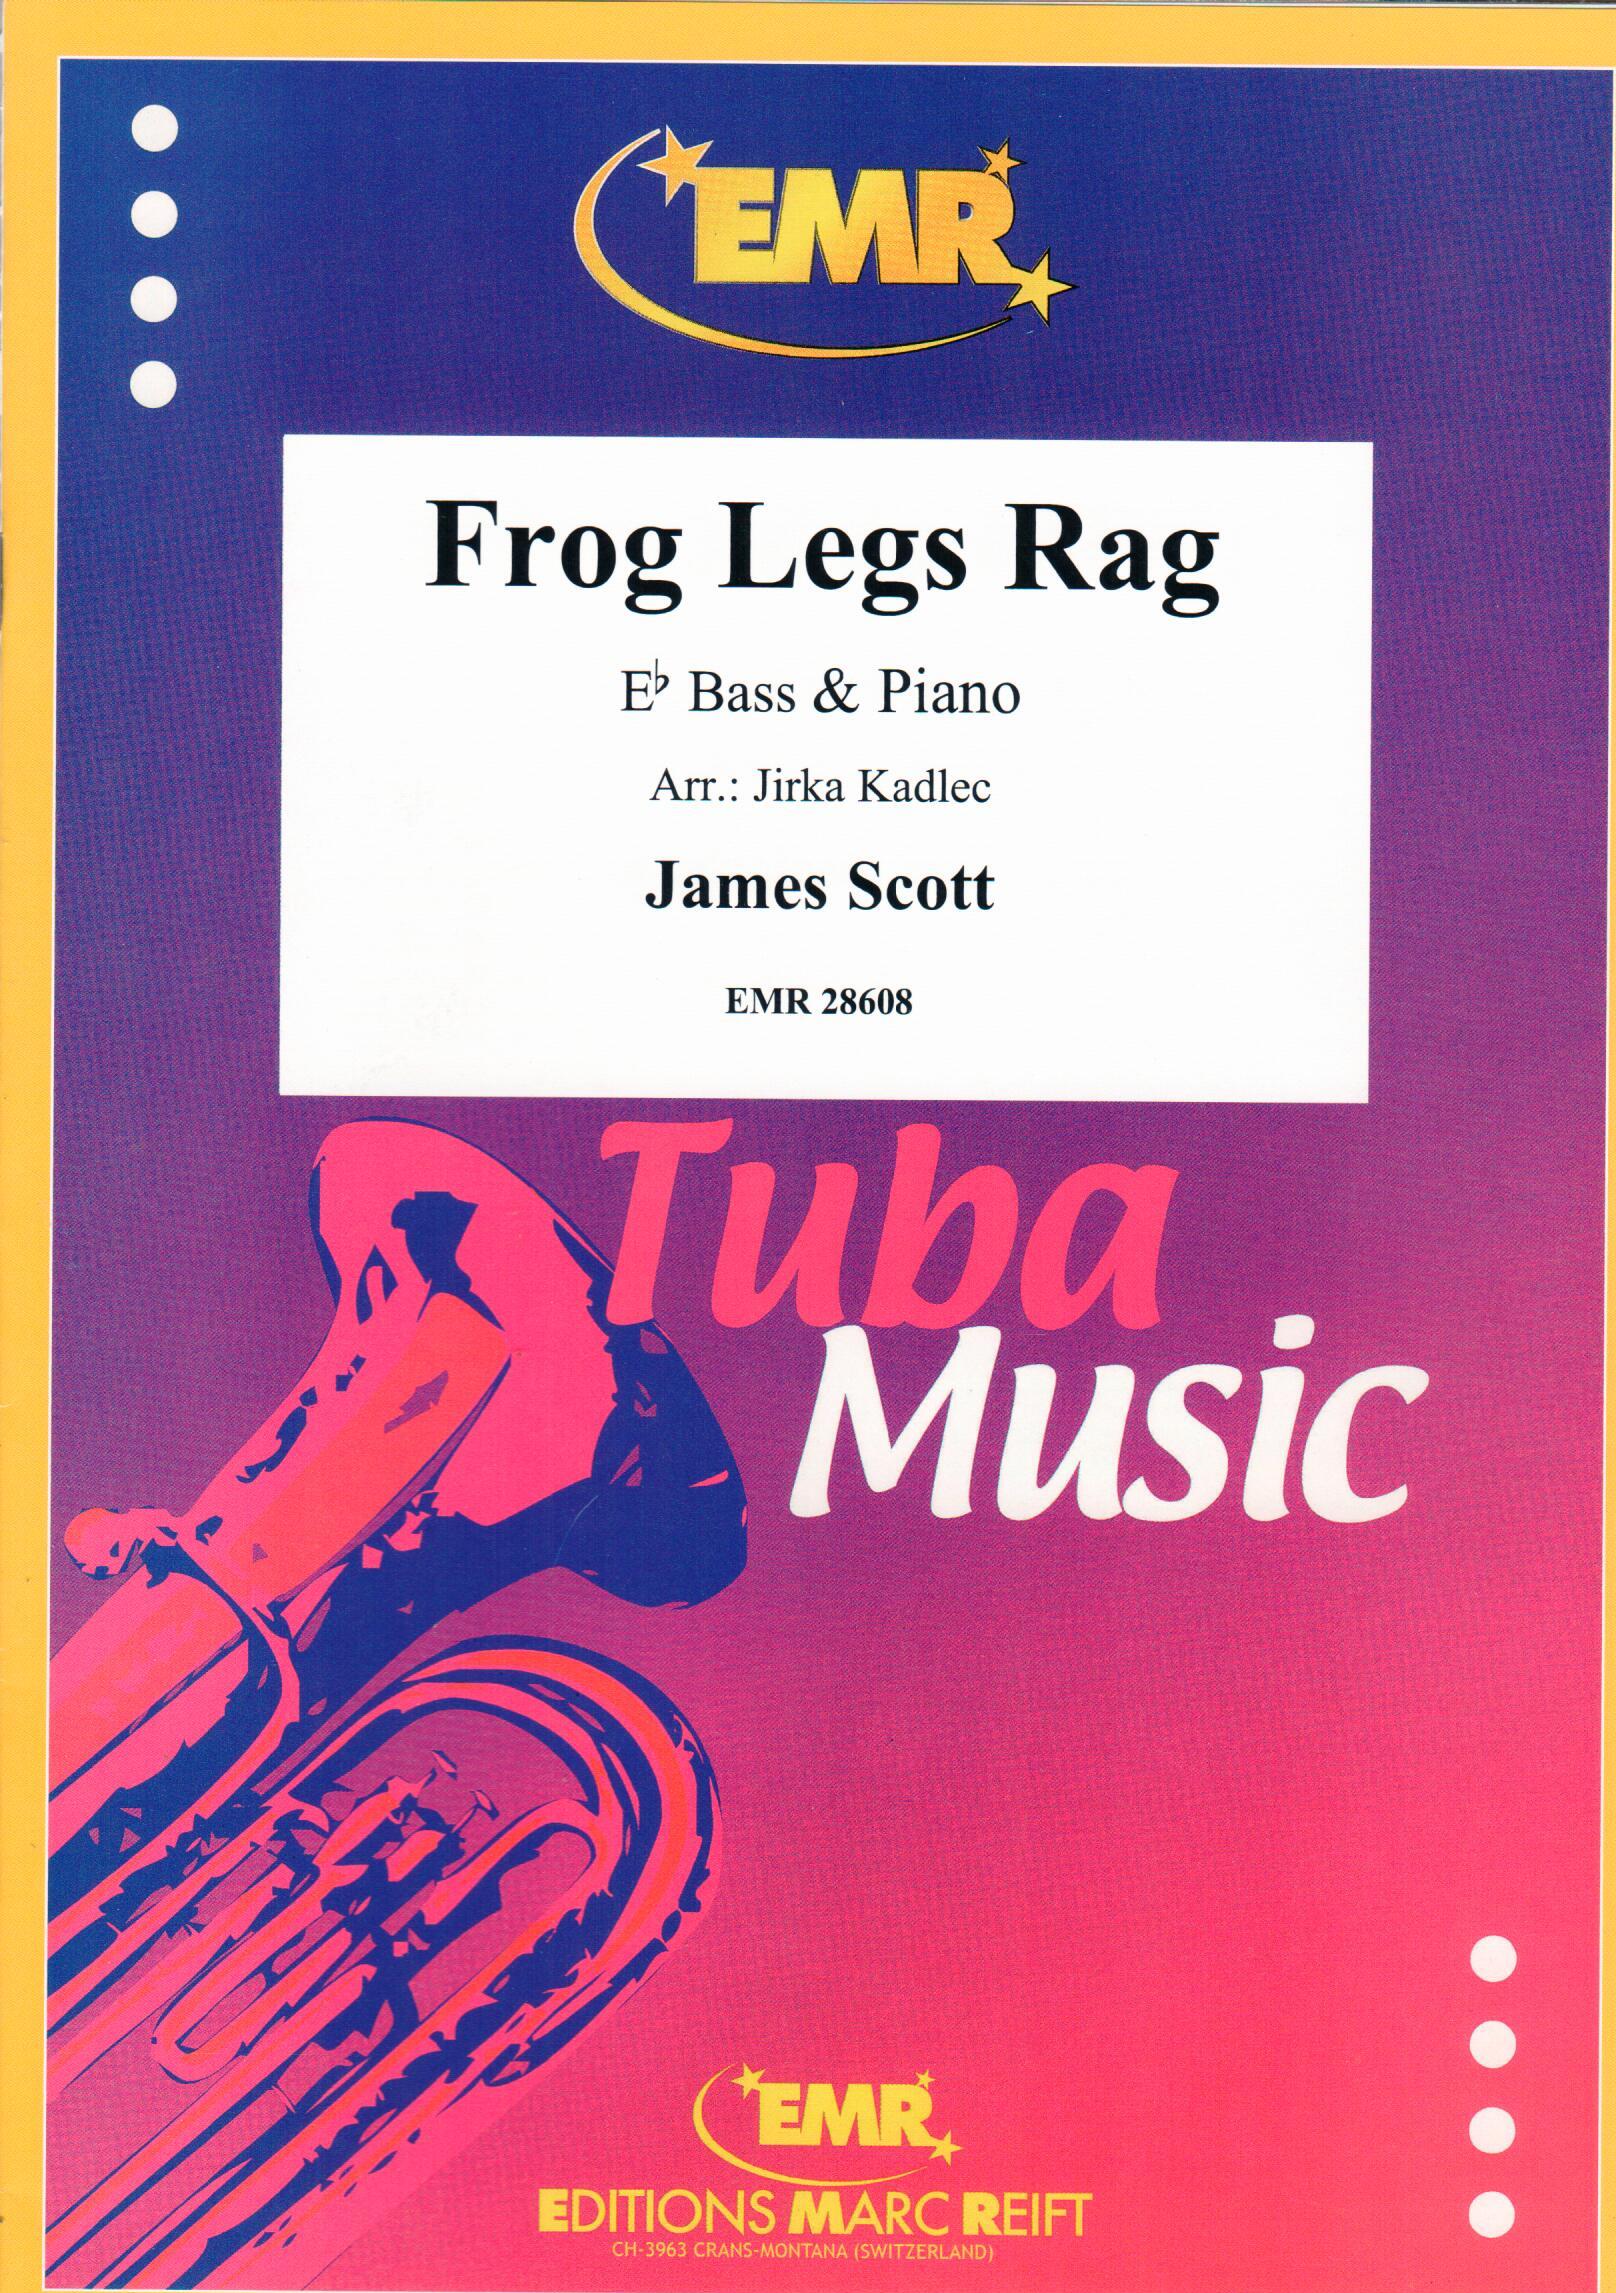 FROG LEGS RAG, SOLOS - E♭. Bass